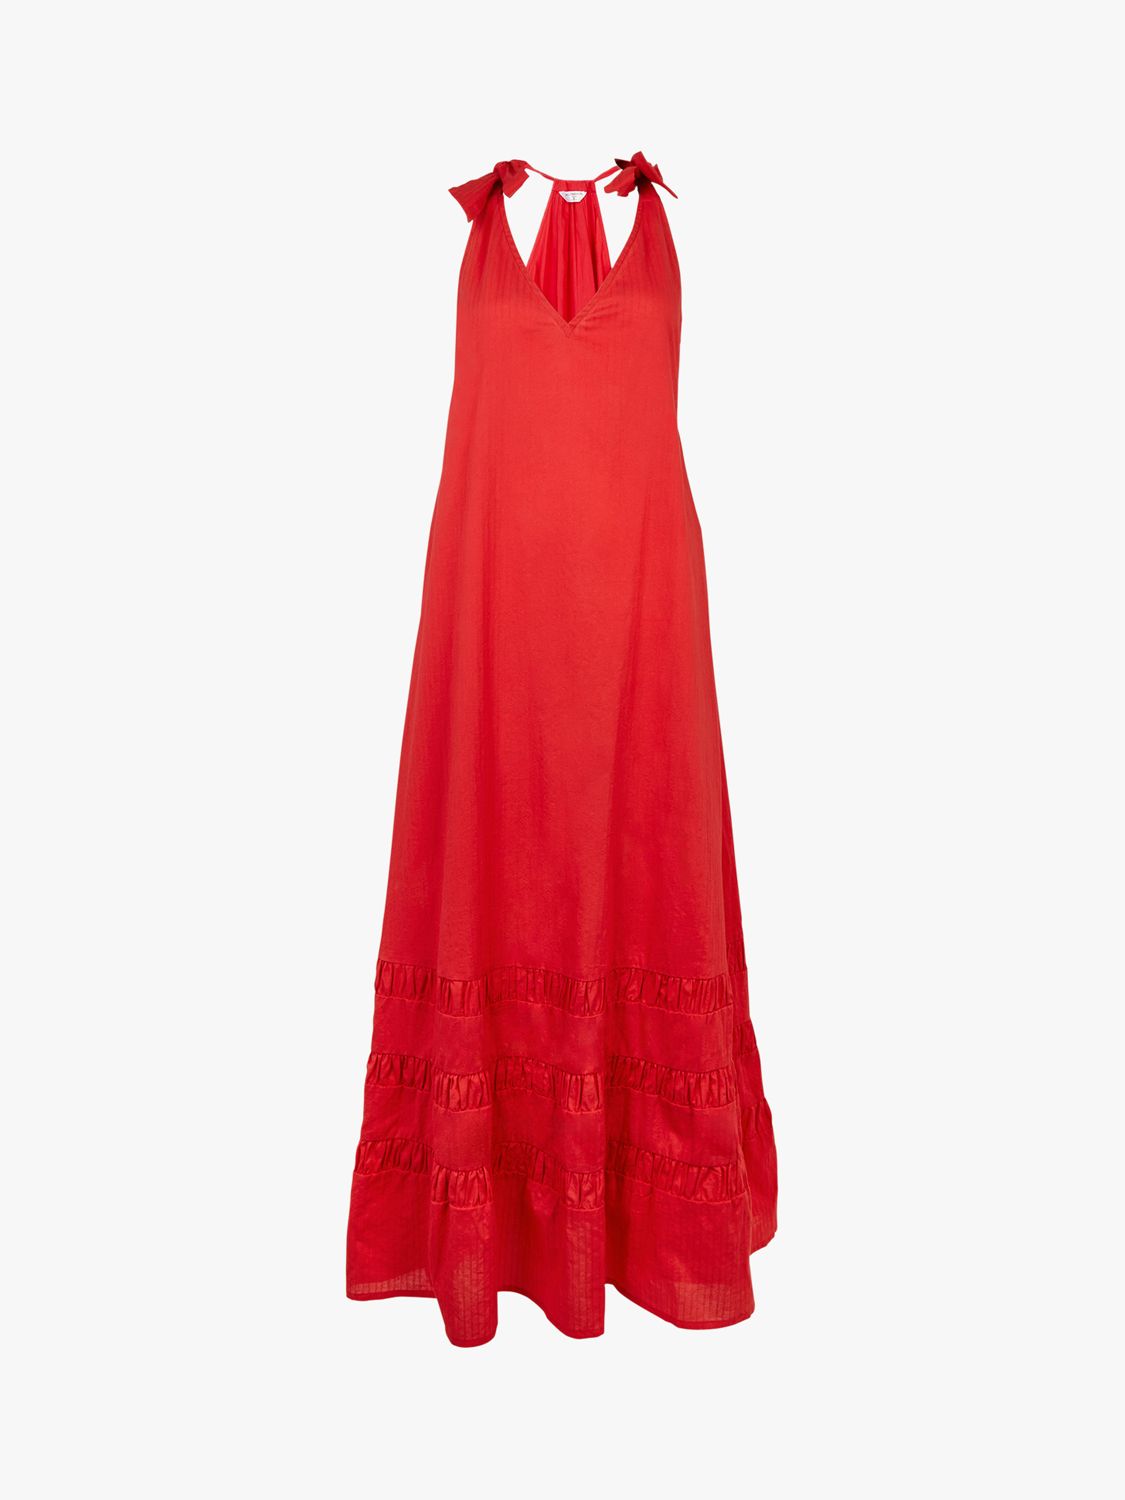 Accessorize Ruched Hem Sleeveless Maxi Dress, Red, XS